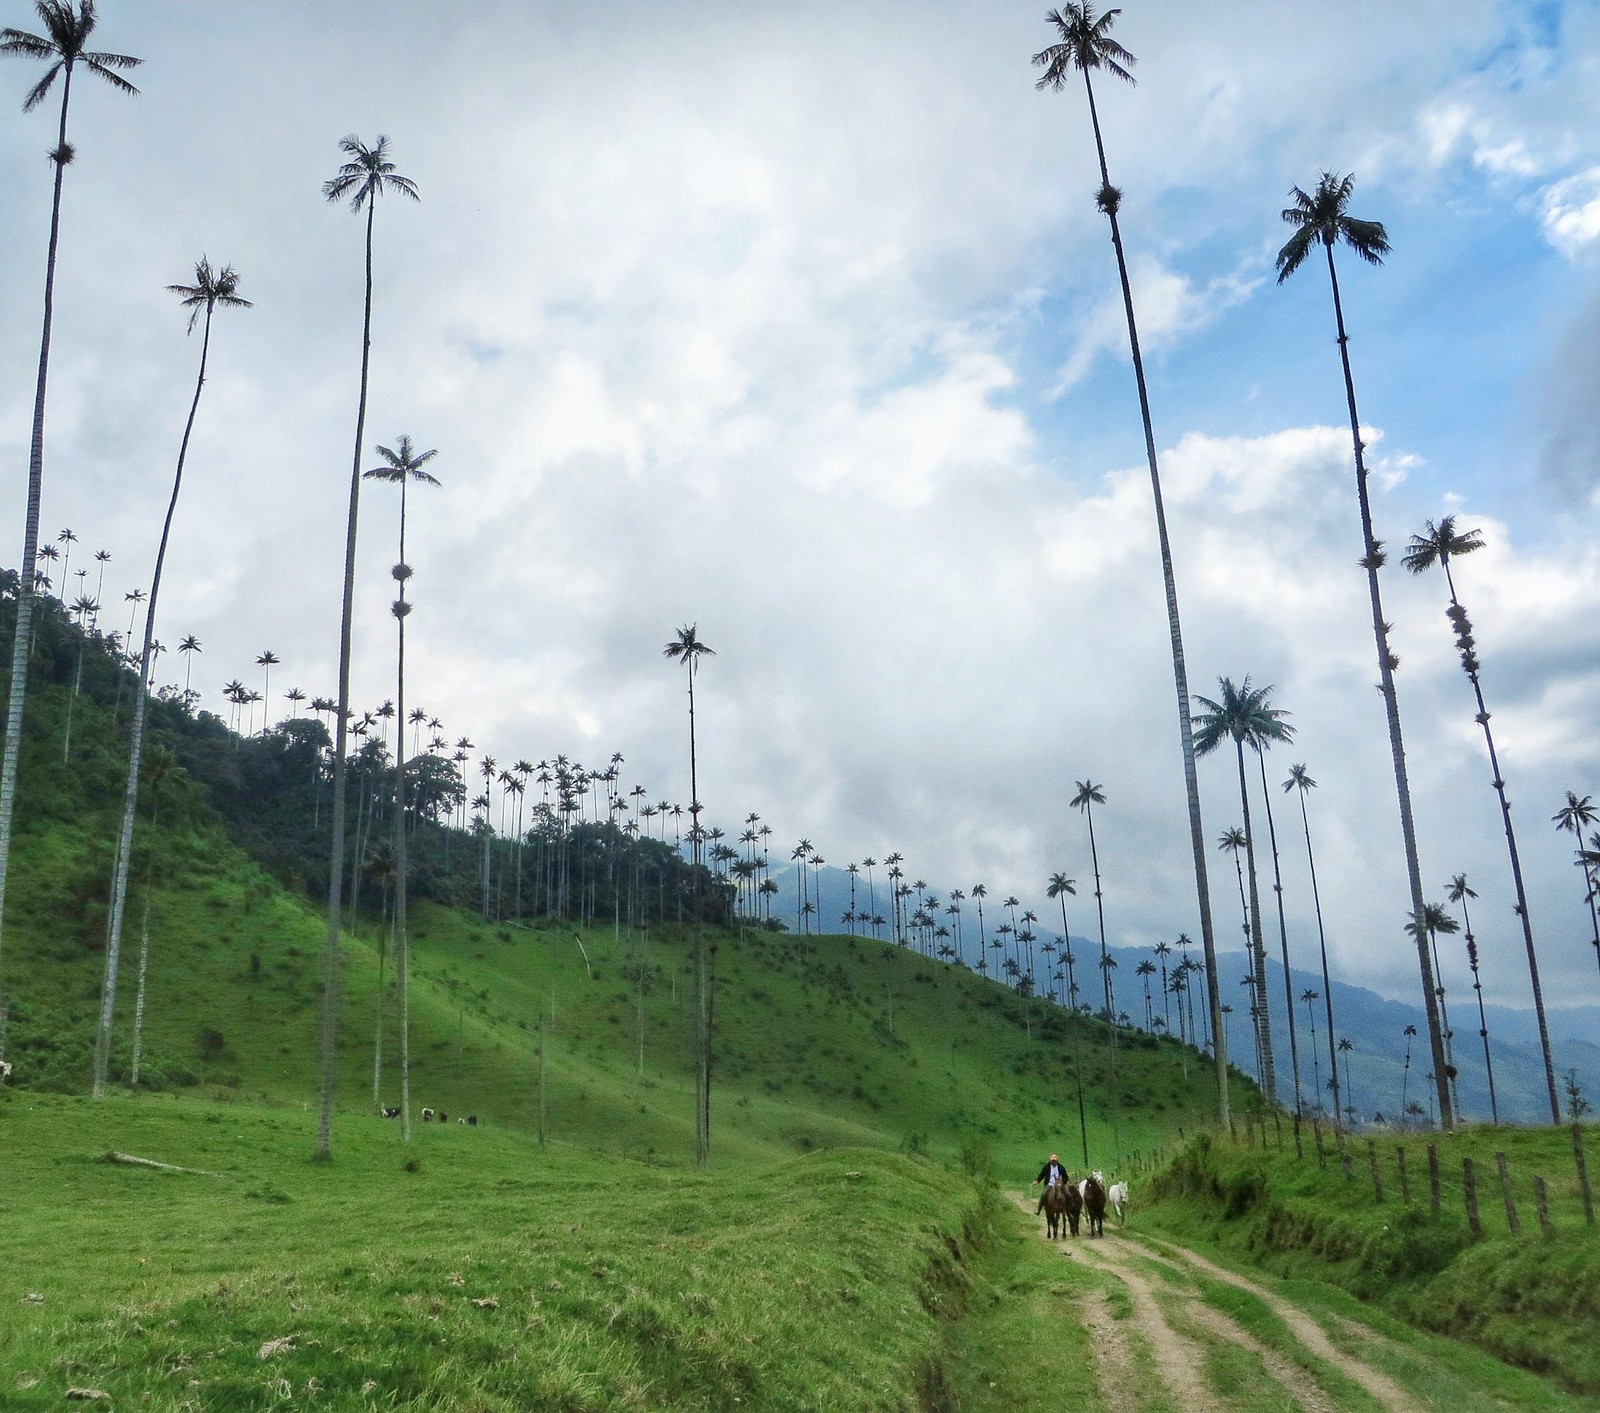 Tall trees in Valle de Cocora near Salento, Colombia